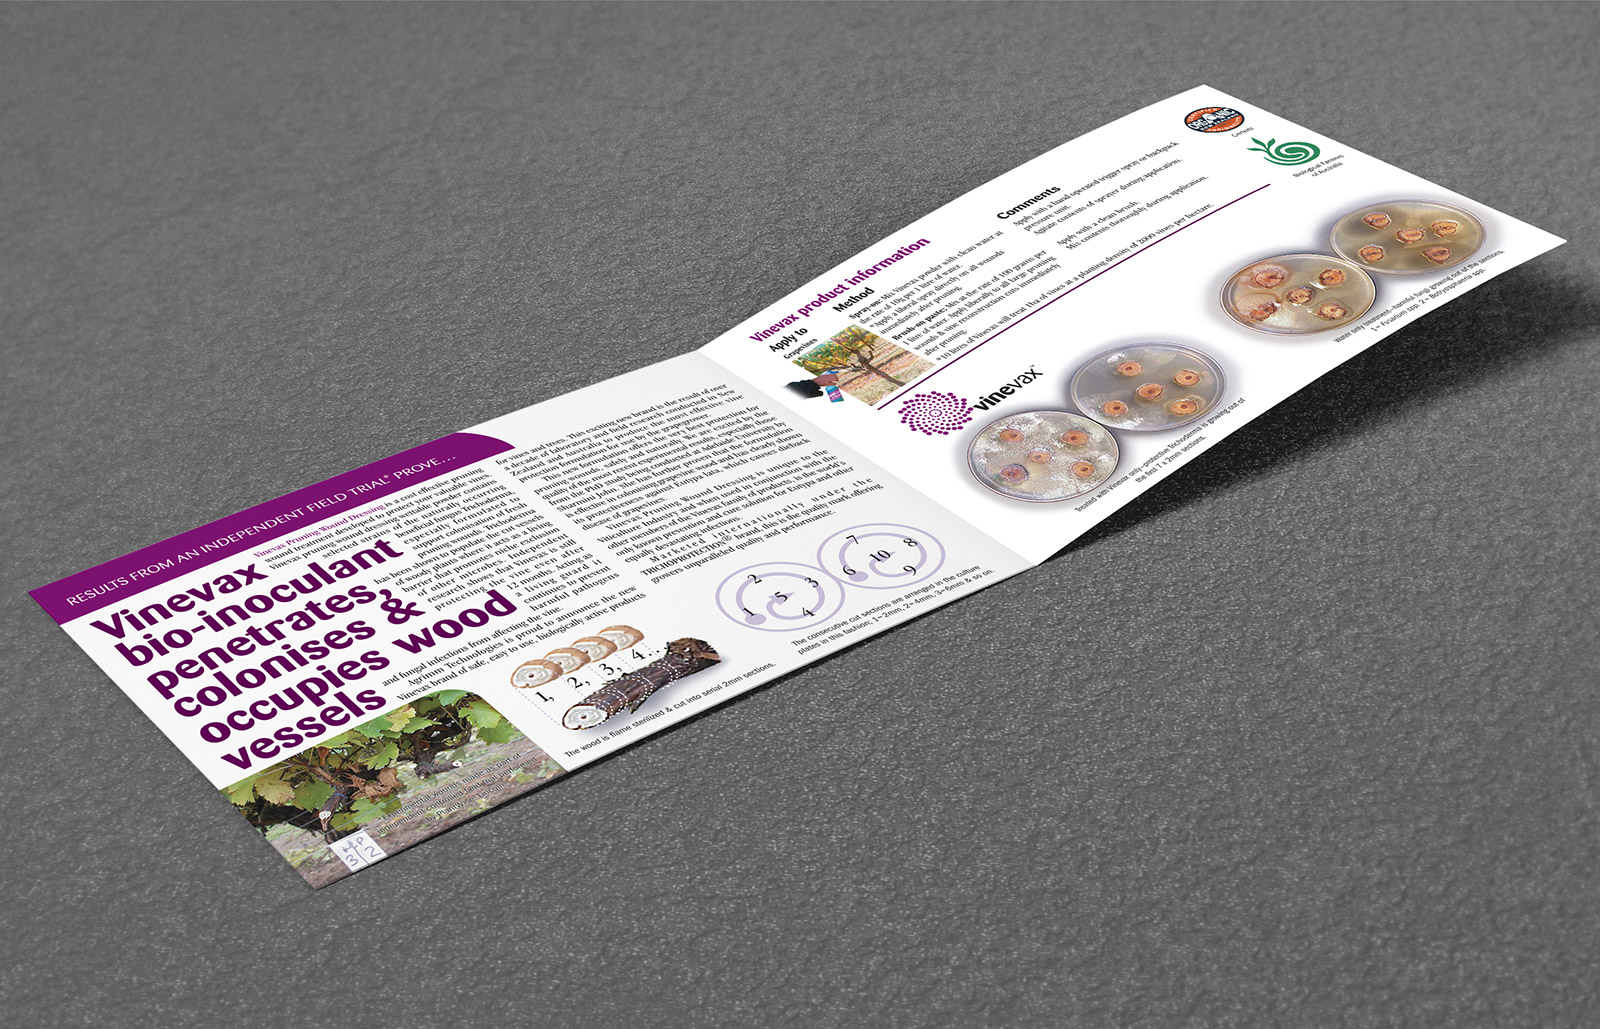 Vinevax PWD brochure redesign inside spread